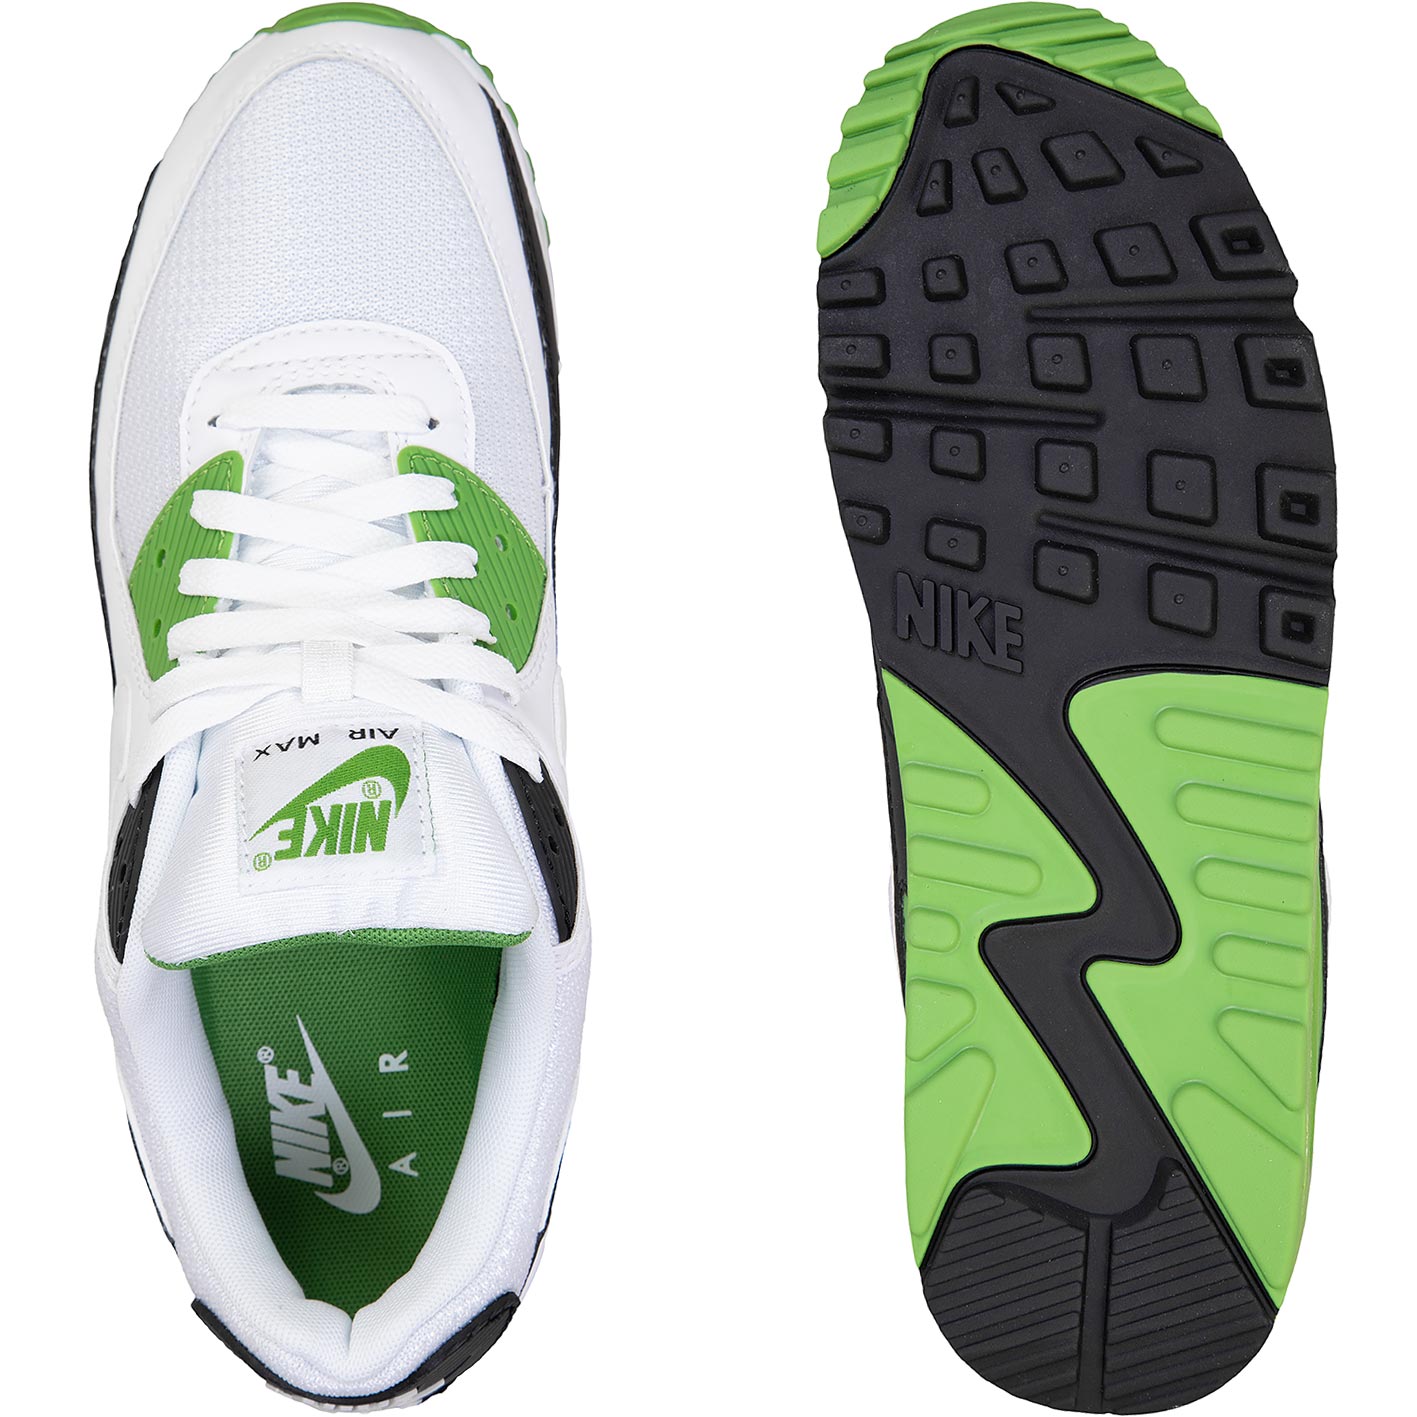 ☆ Nike Air Max 90 Sneaker weiß/grün - hier bestellen!